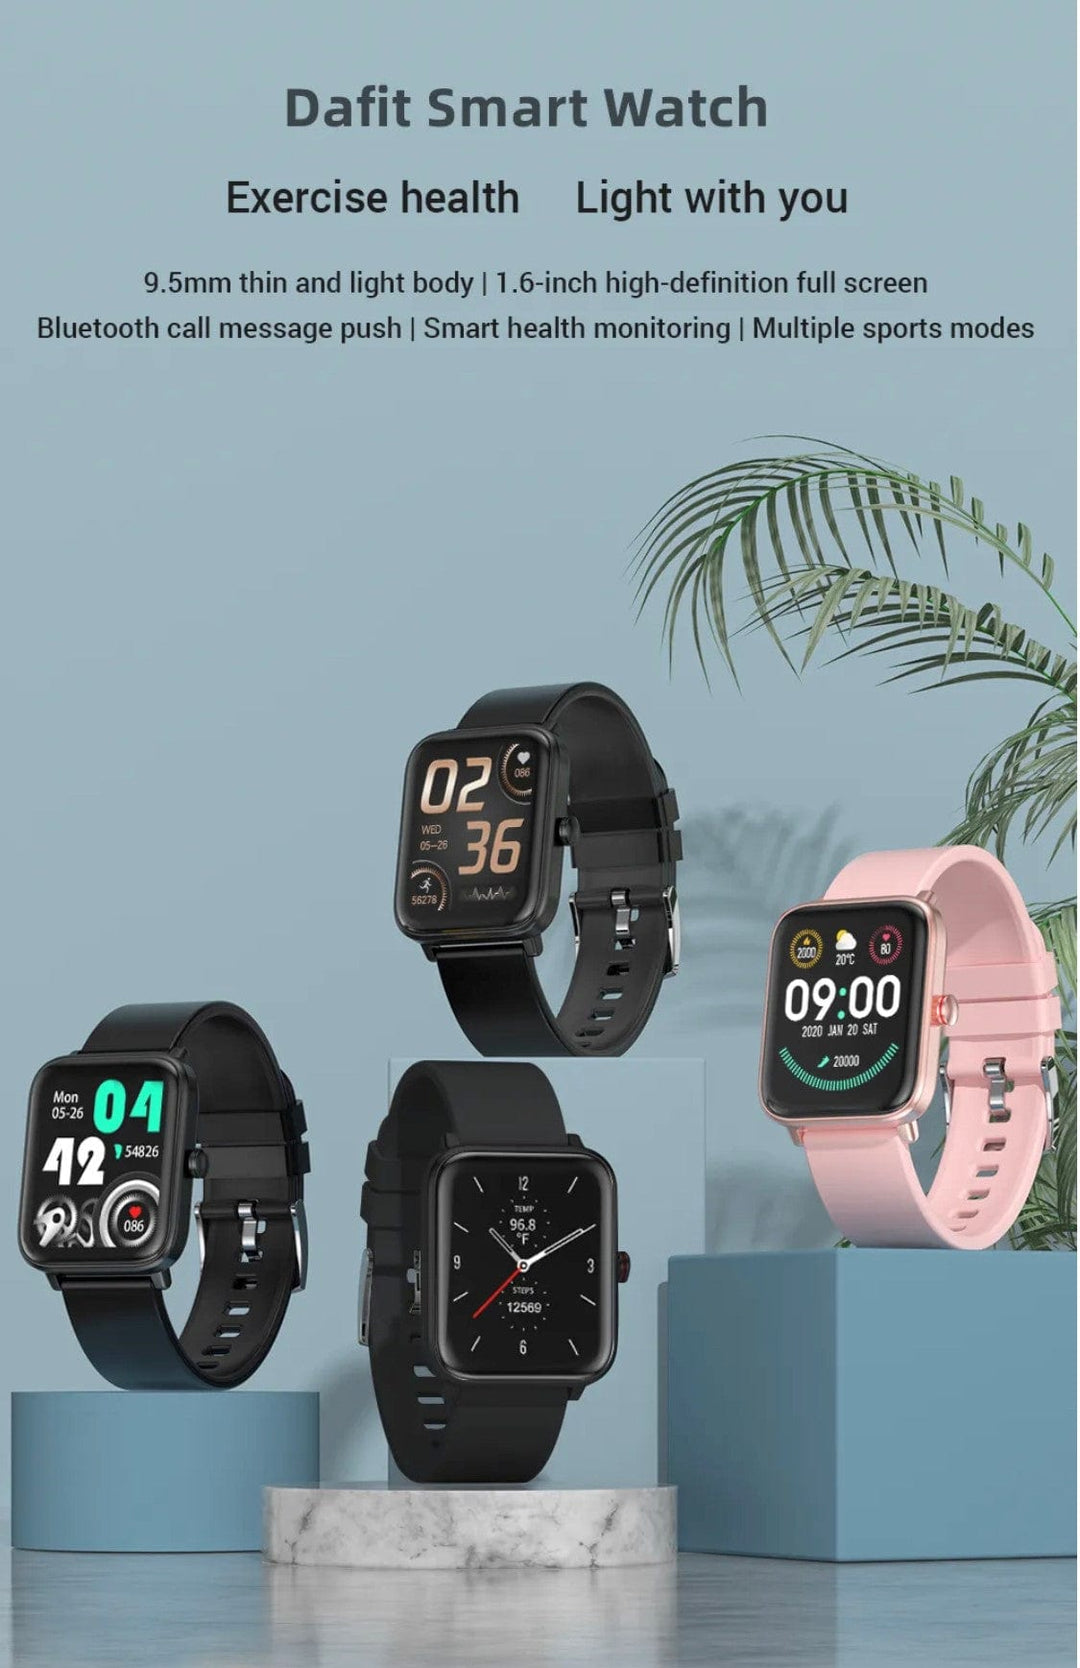 Smart Watch Pink Smartoby Dafit Reloj Pink - Smart Watch South Africa